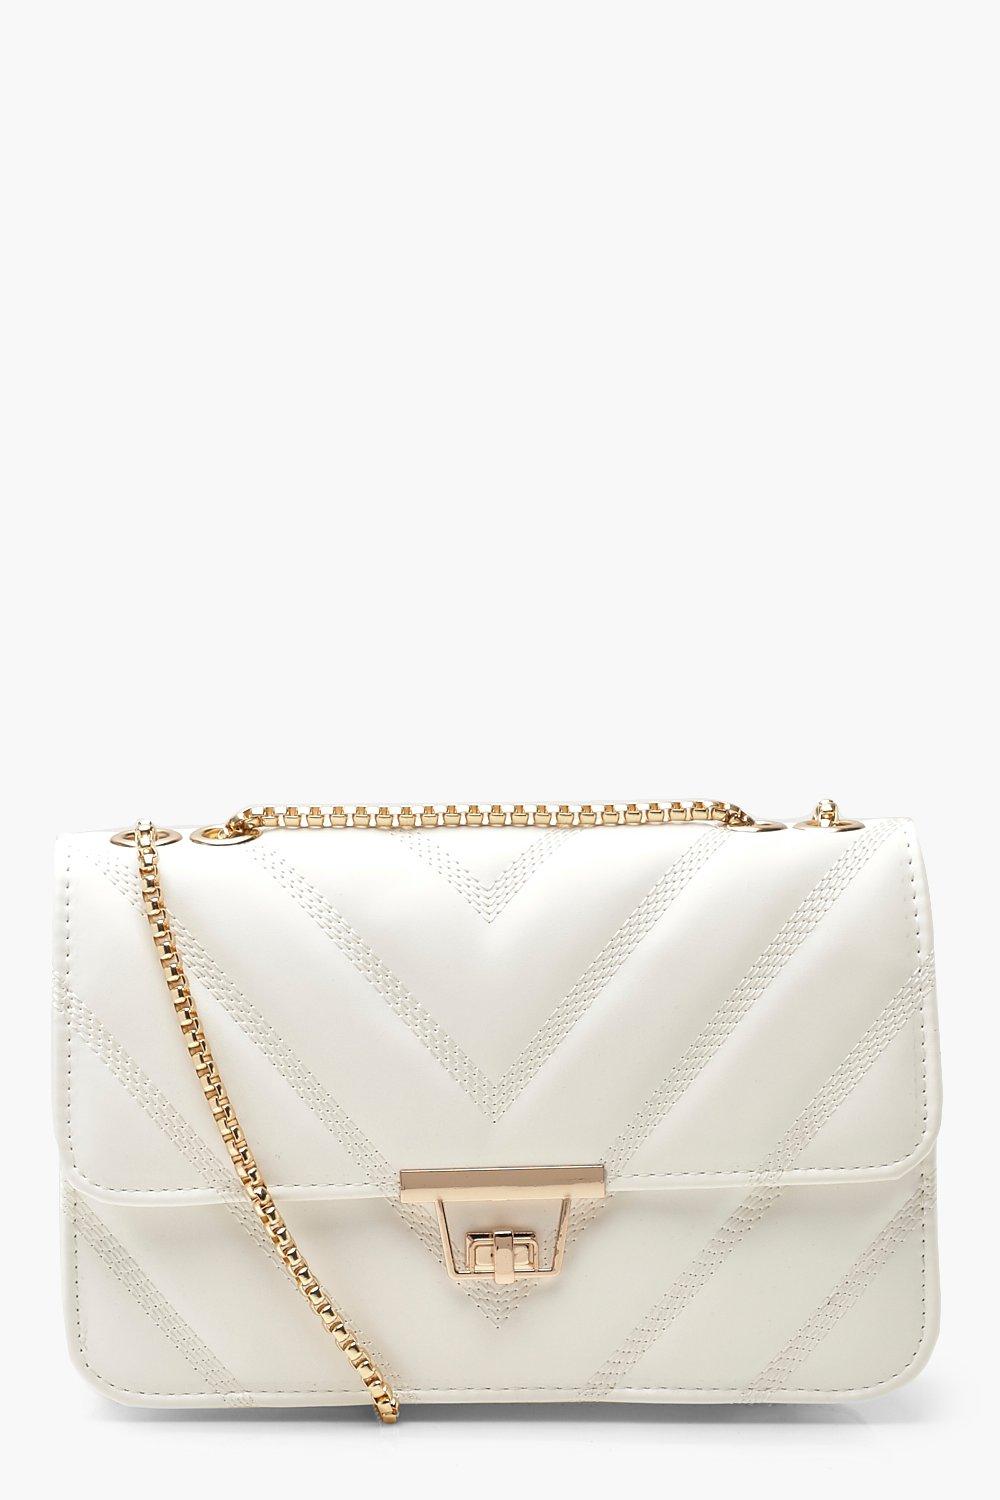 White Bags, Handbags & Purses | COACH® Outlet